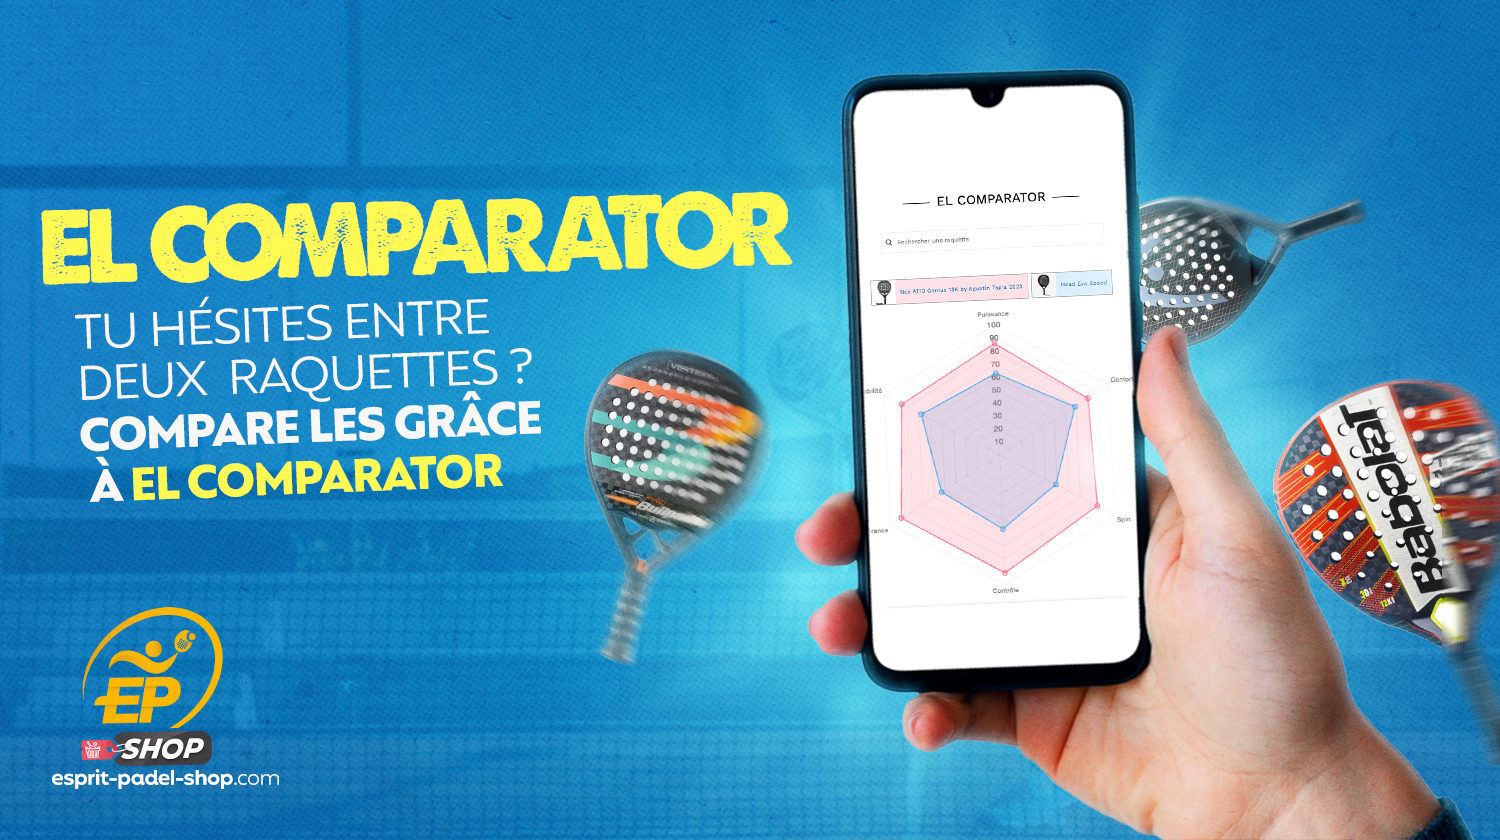 "El Comparator" landt op Esprit Padel Shop